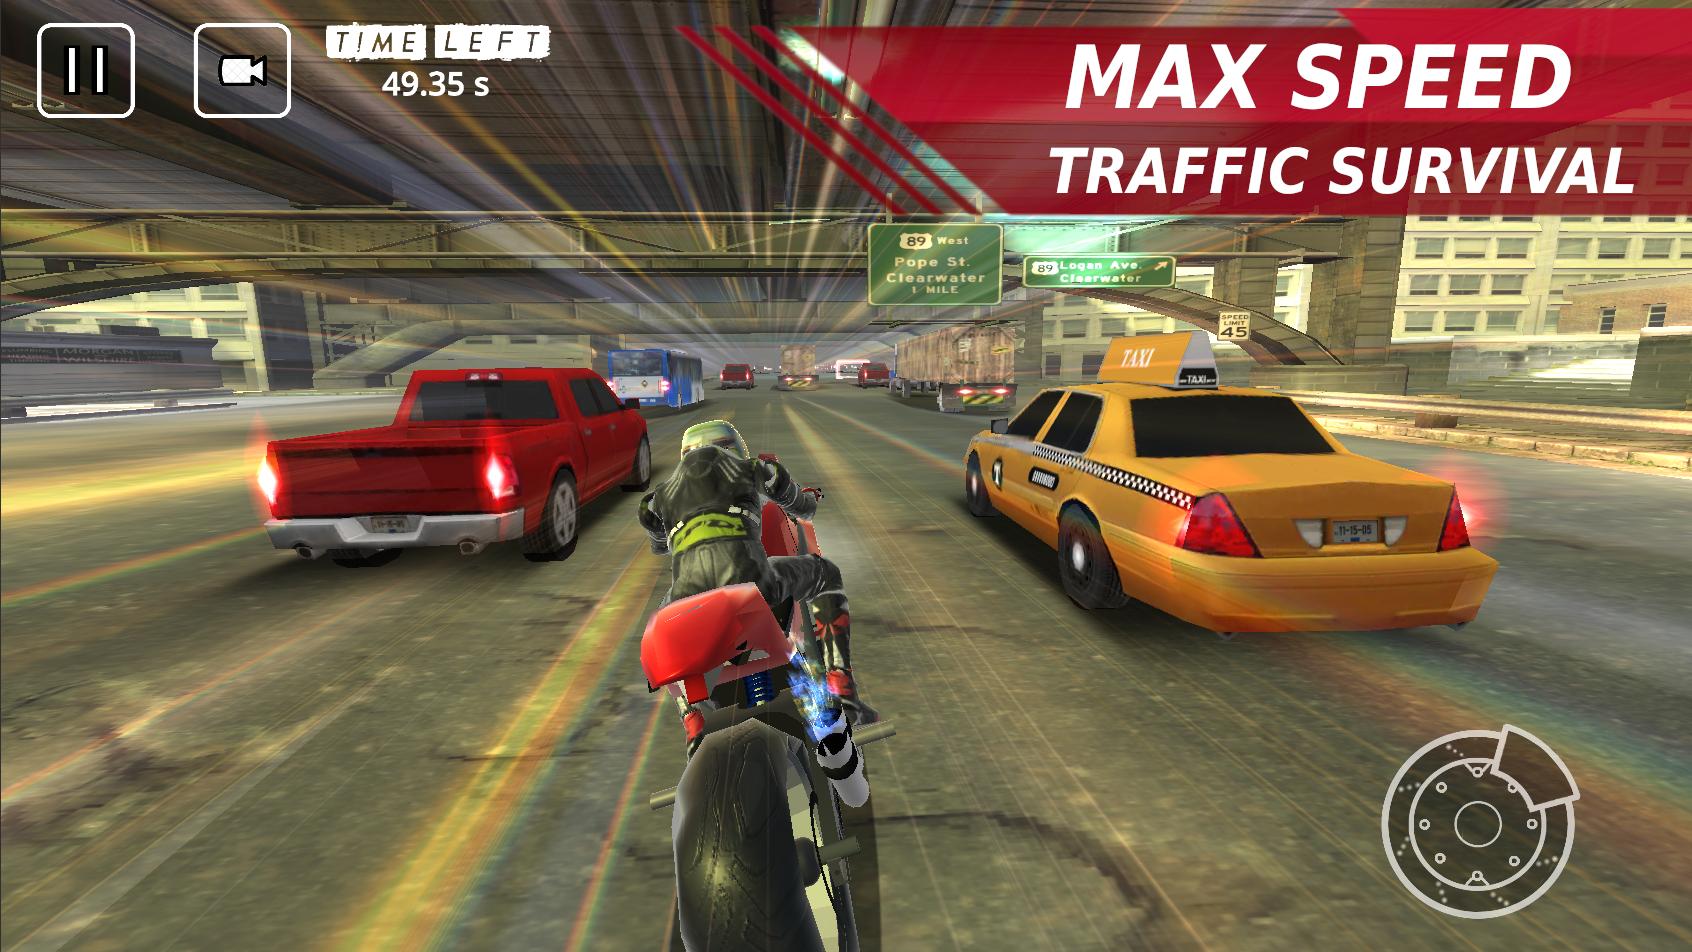 Rebel Gears Drag Bike Racing / CSR Race Moto Game 1.3.2 Screenshot 13